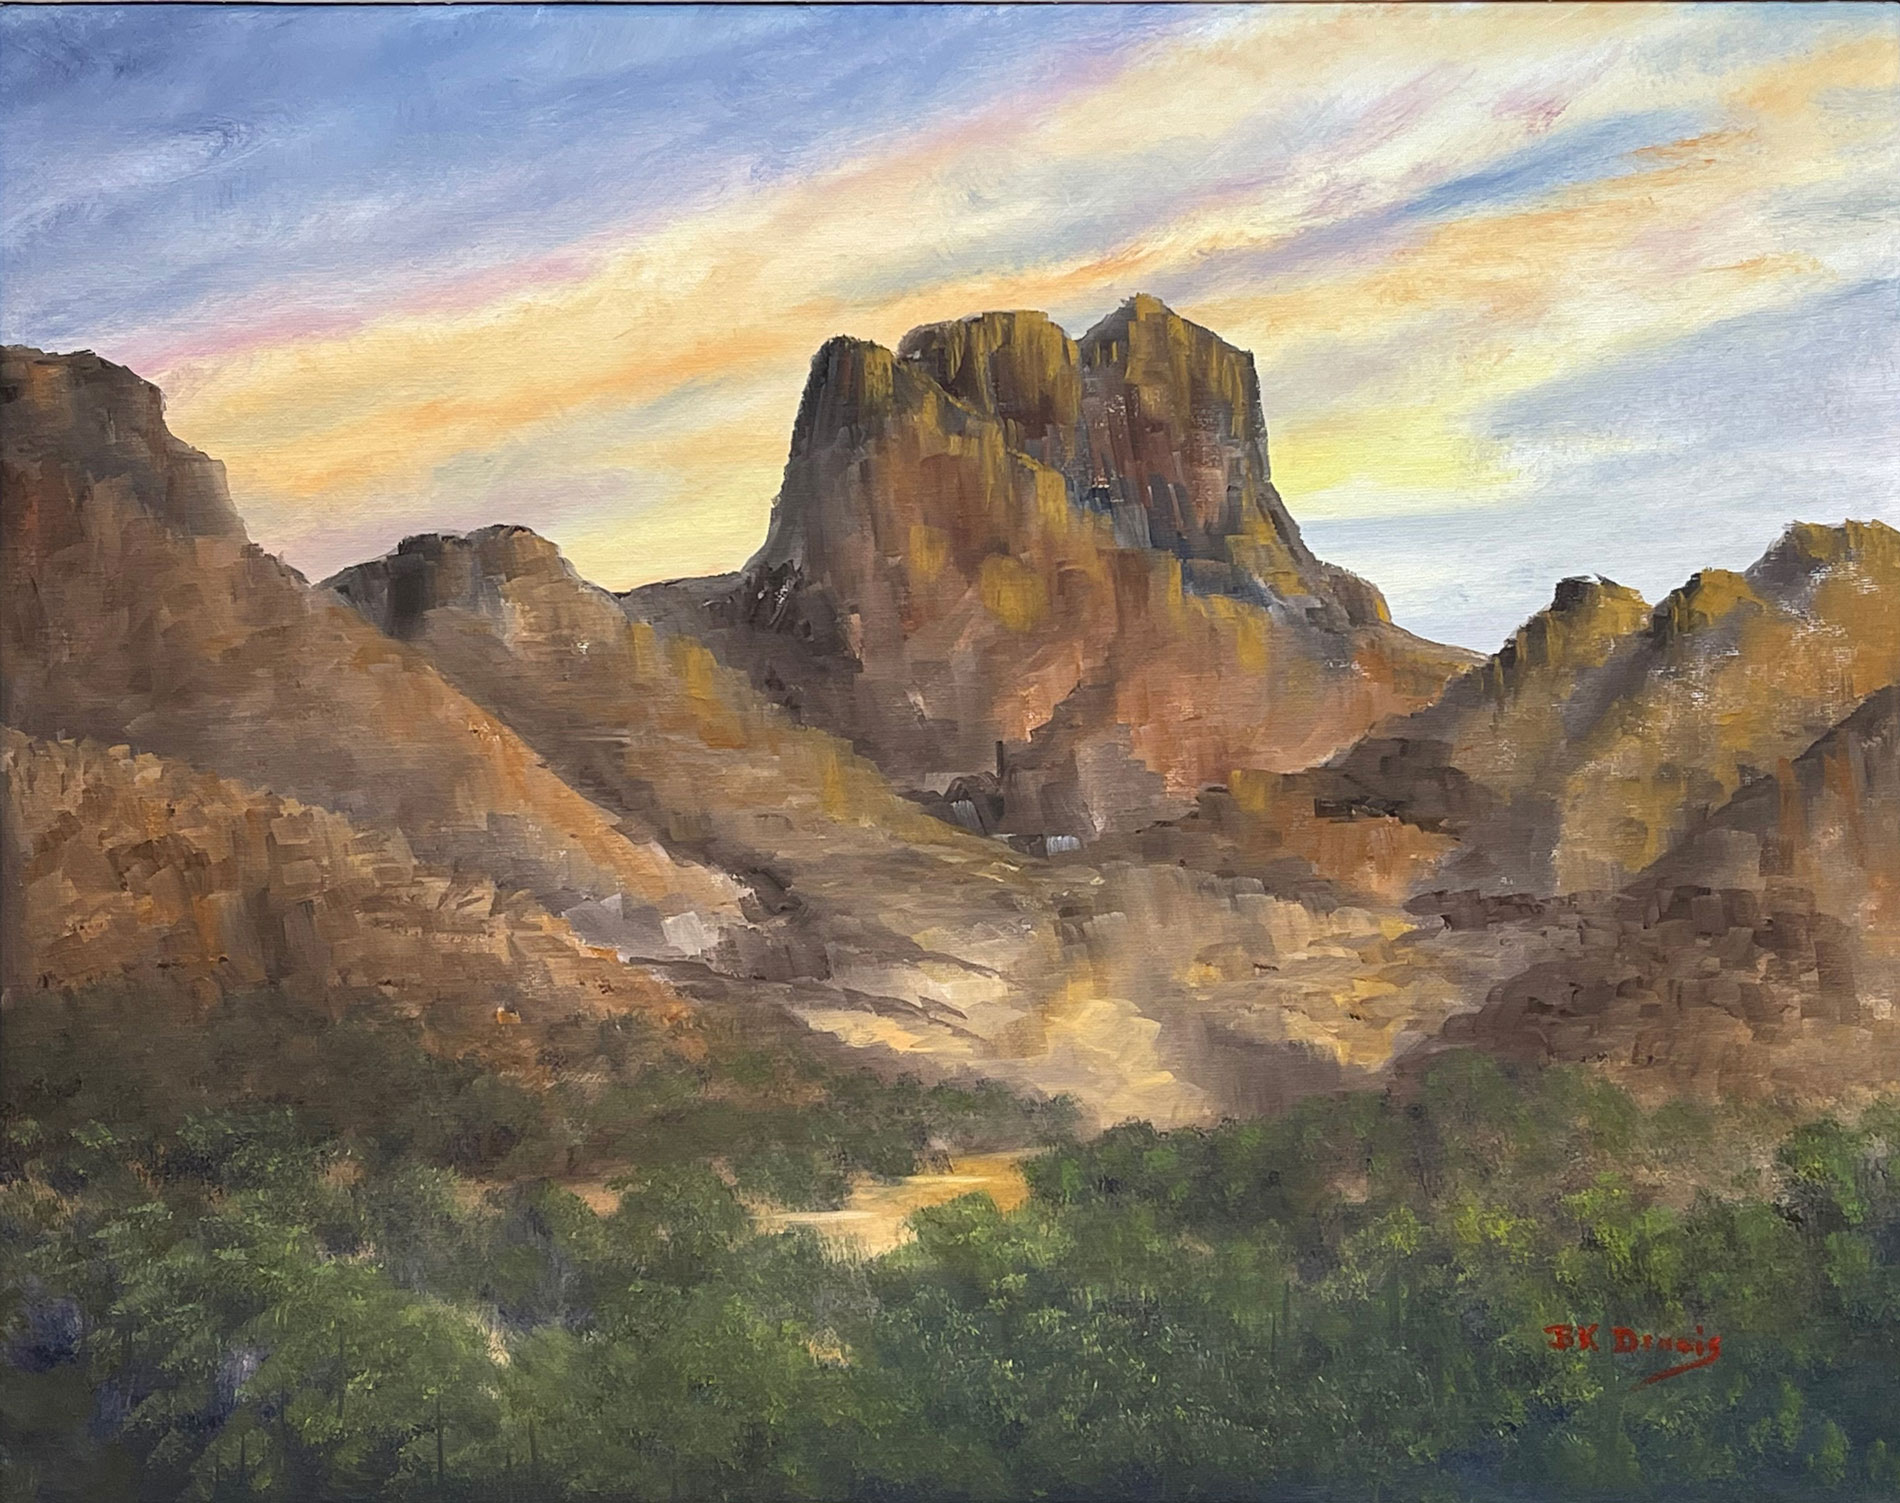 Casa Grande at Dawn - an Oil Painting by BK Dennis of Alpine